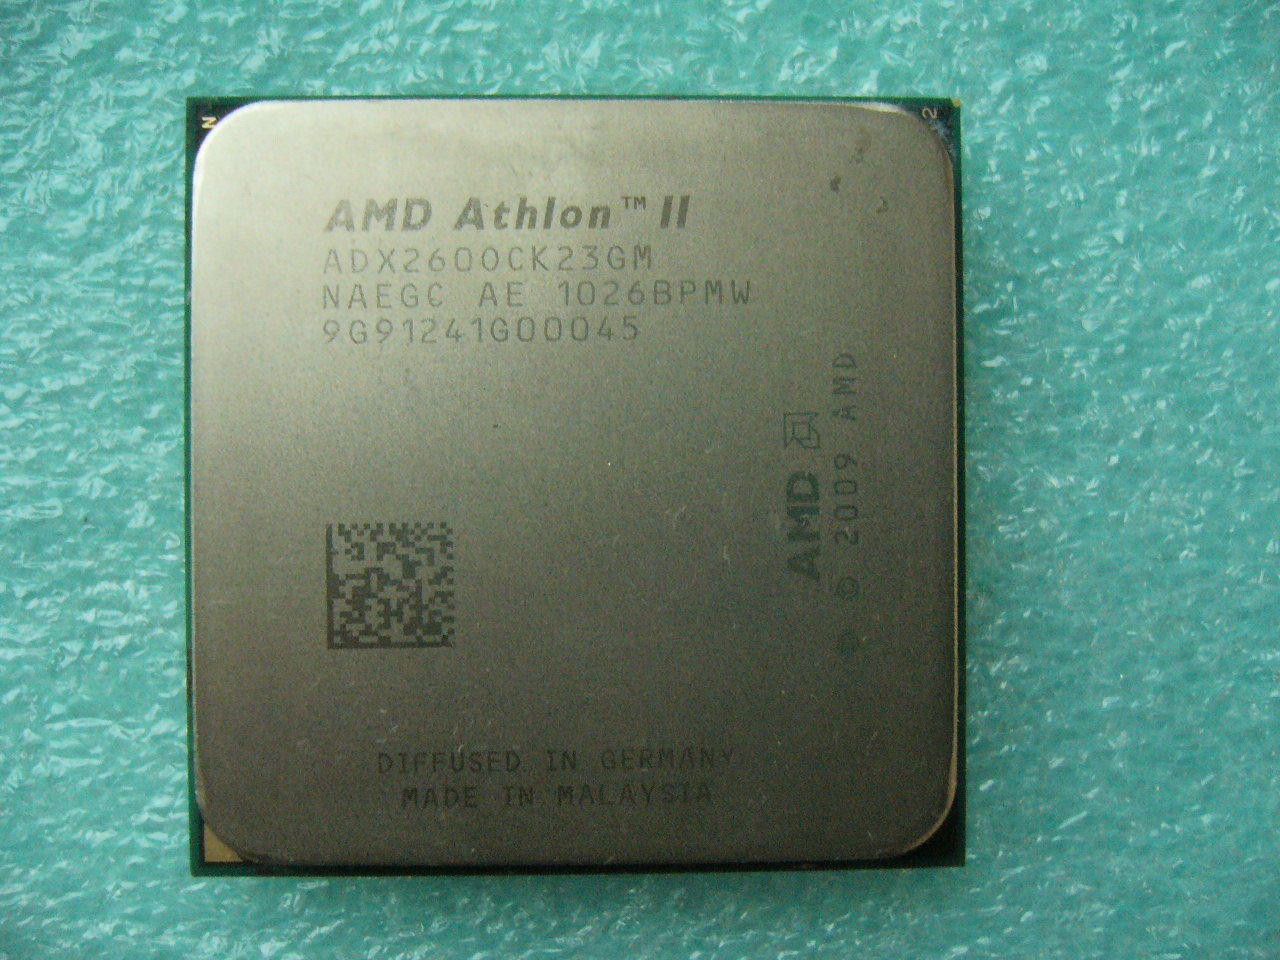 QTY 1x AMD Athlon II X2 260 3.2 GHz Dual-Core (ADX260OCK23GM) CPU Socket AM3